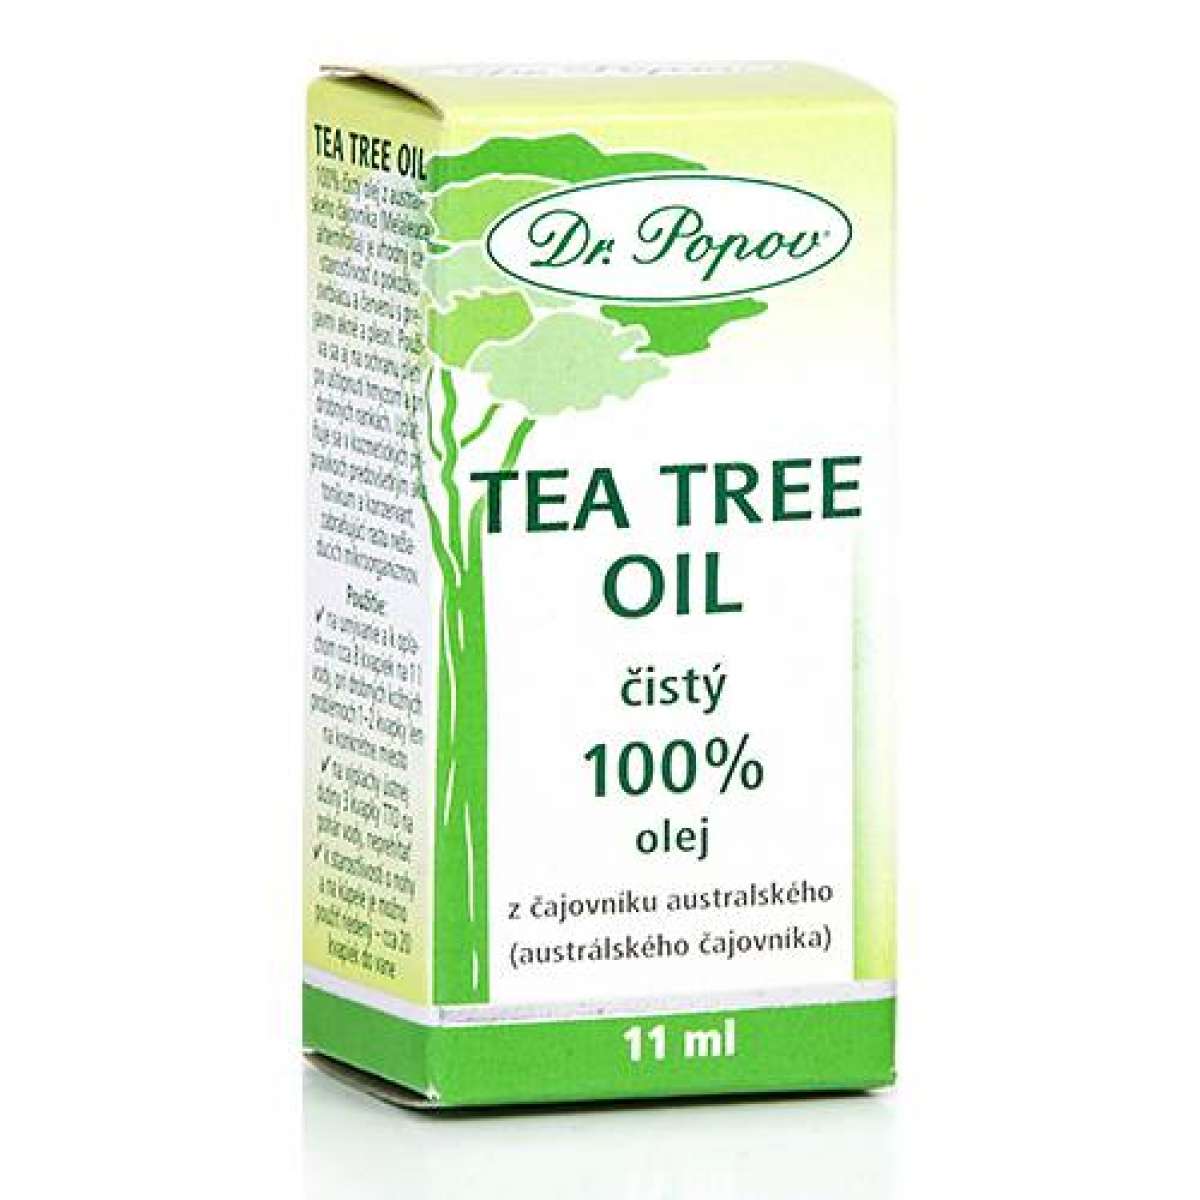 Чайное дерево нос. Масло чайного дерева. 100 Tea Tree Oil. Масло чайного дерева 100%. Капли чайного дерева.